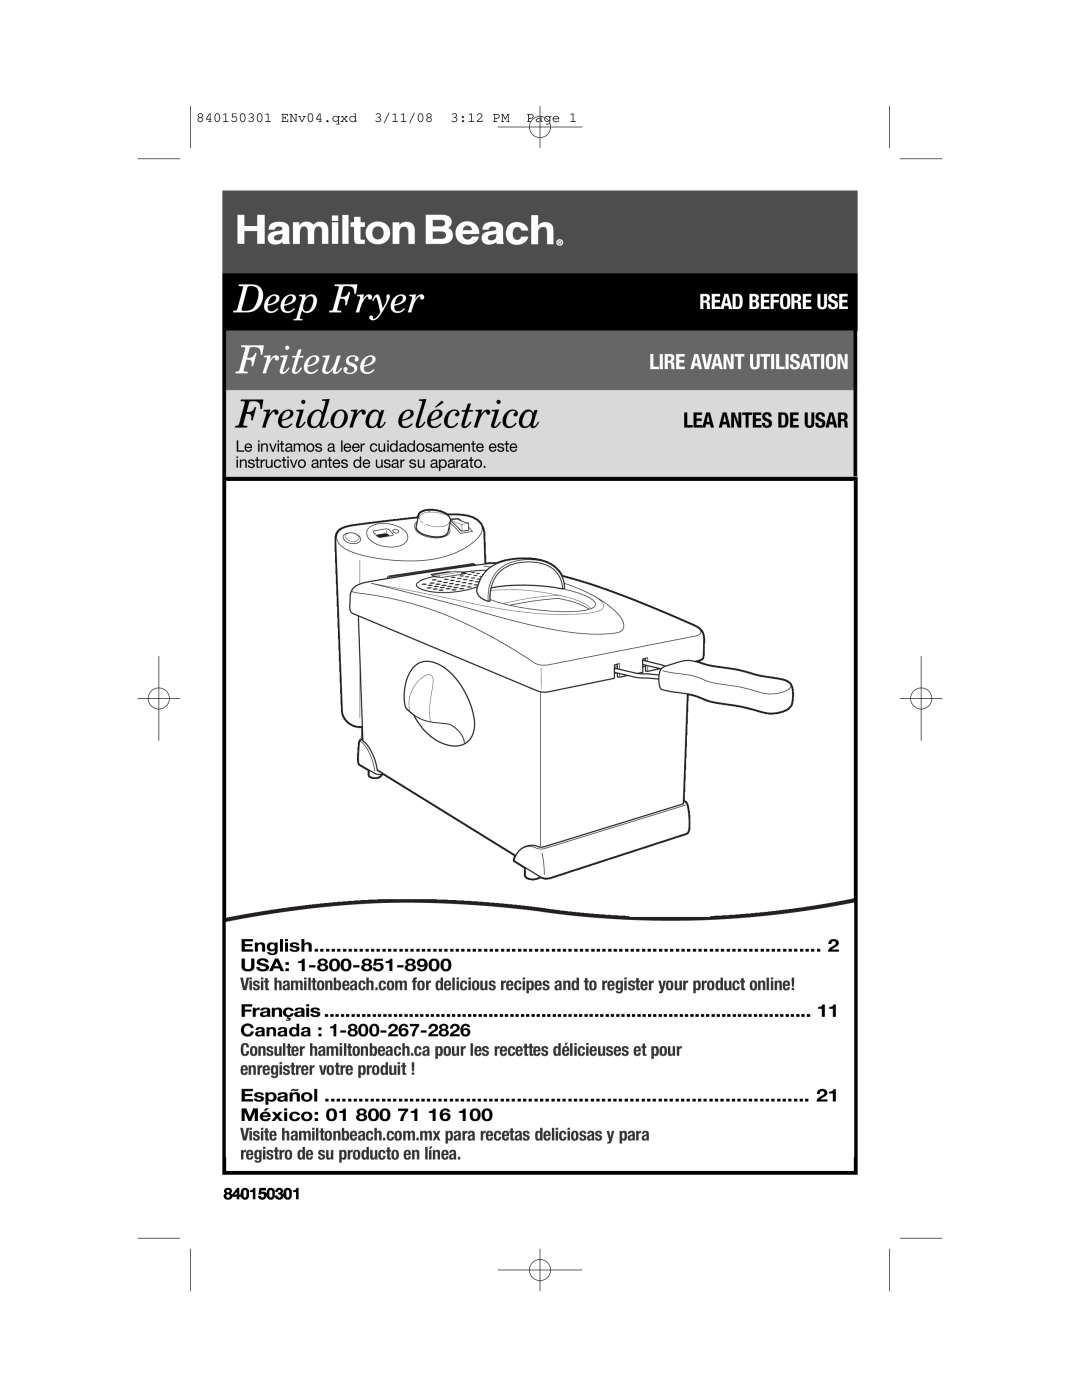 Hamilton Beach 35030C manual Lire Avant Utilisation, Lea Antes De Usar, Read Before Use, Deep Fryer Friteuse 